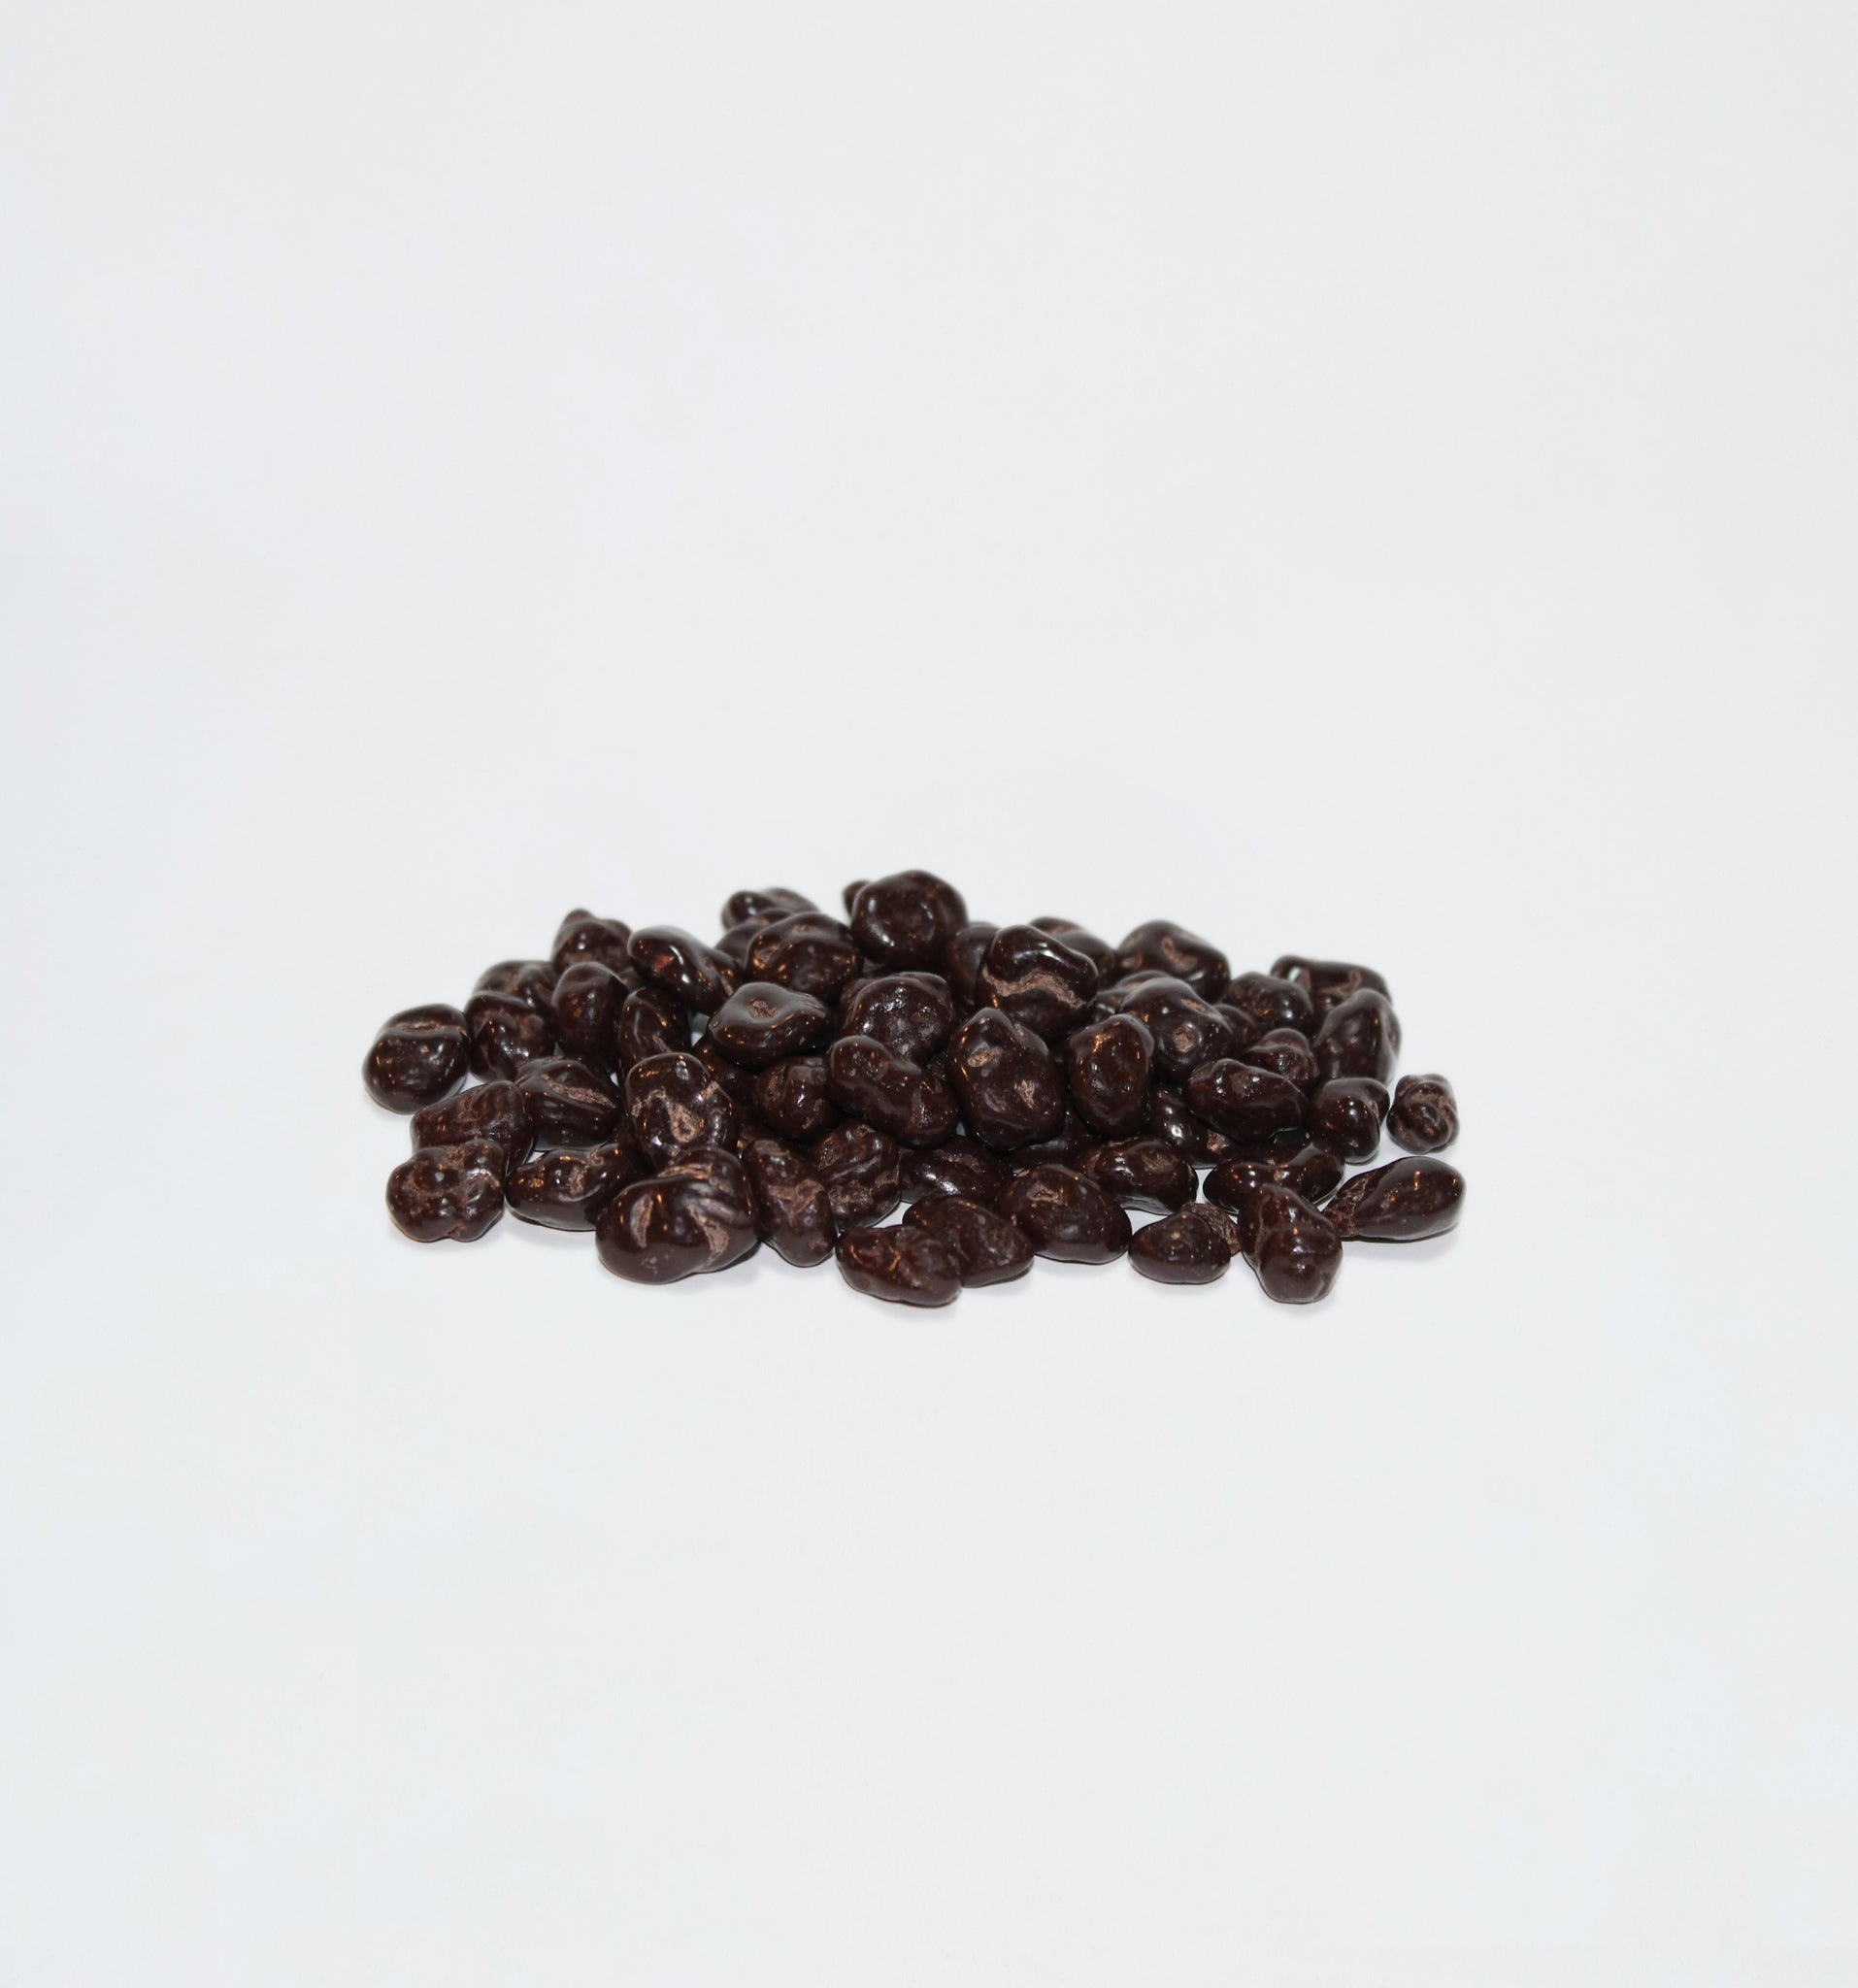 Raisins Dipped in Chocolate